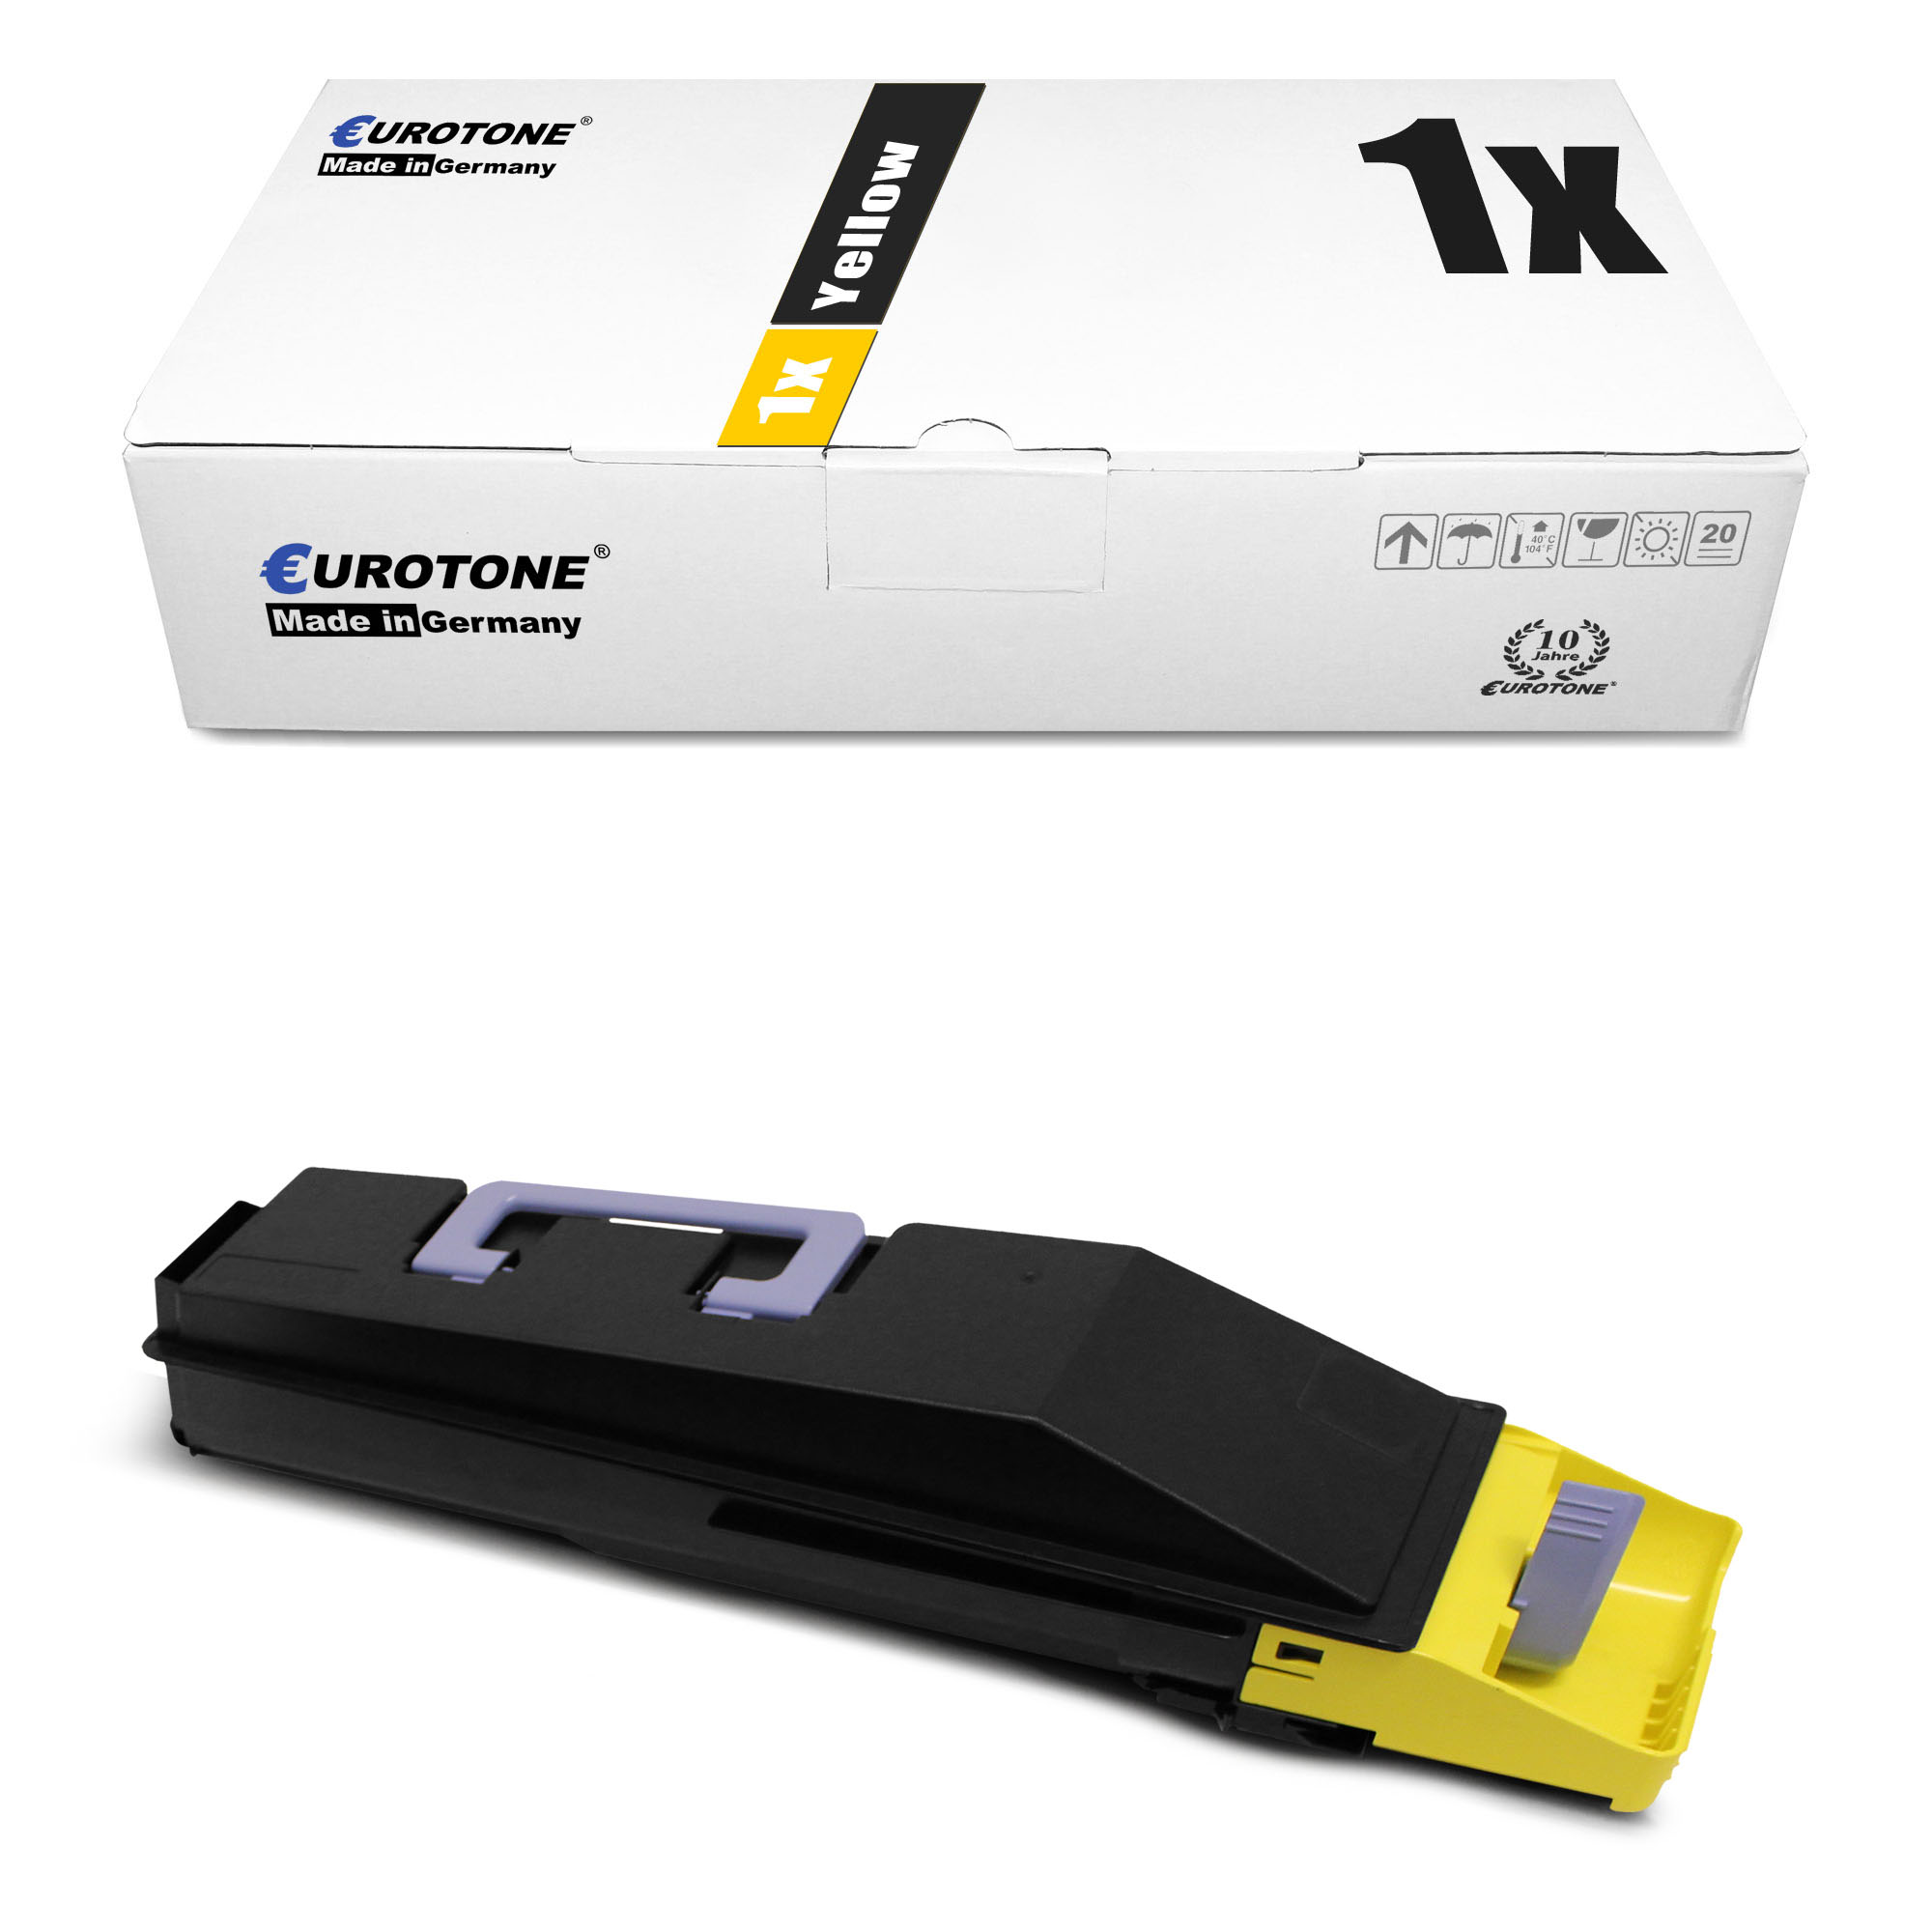 Cartridge EUROTONE Toner 4462110016) Yellow (Utax ET3140325